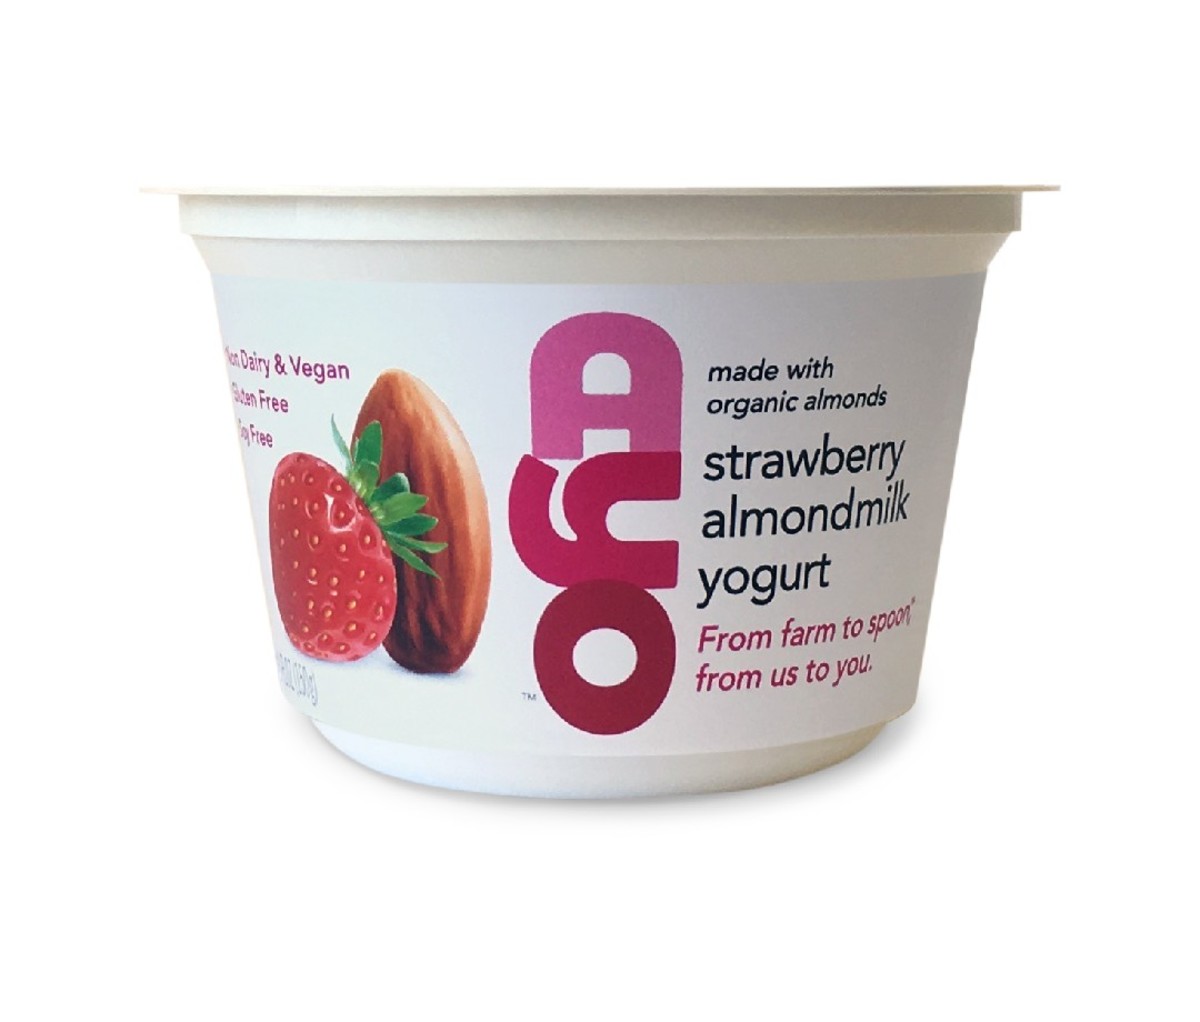 AYO organic yogurt with almond milk